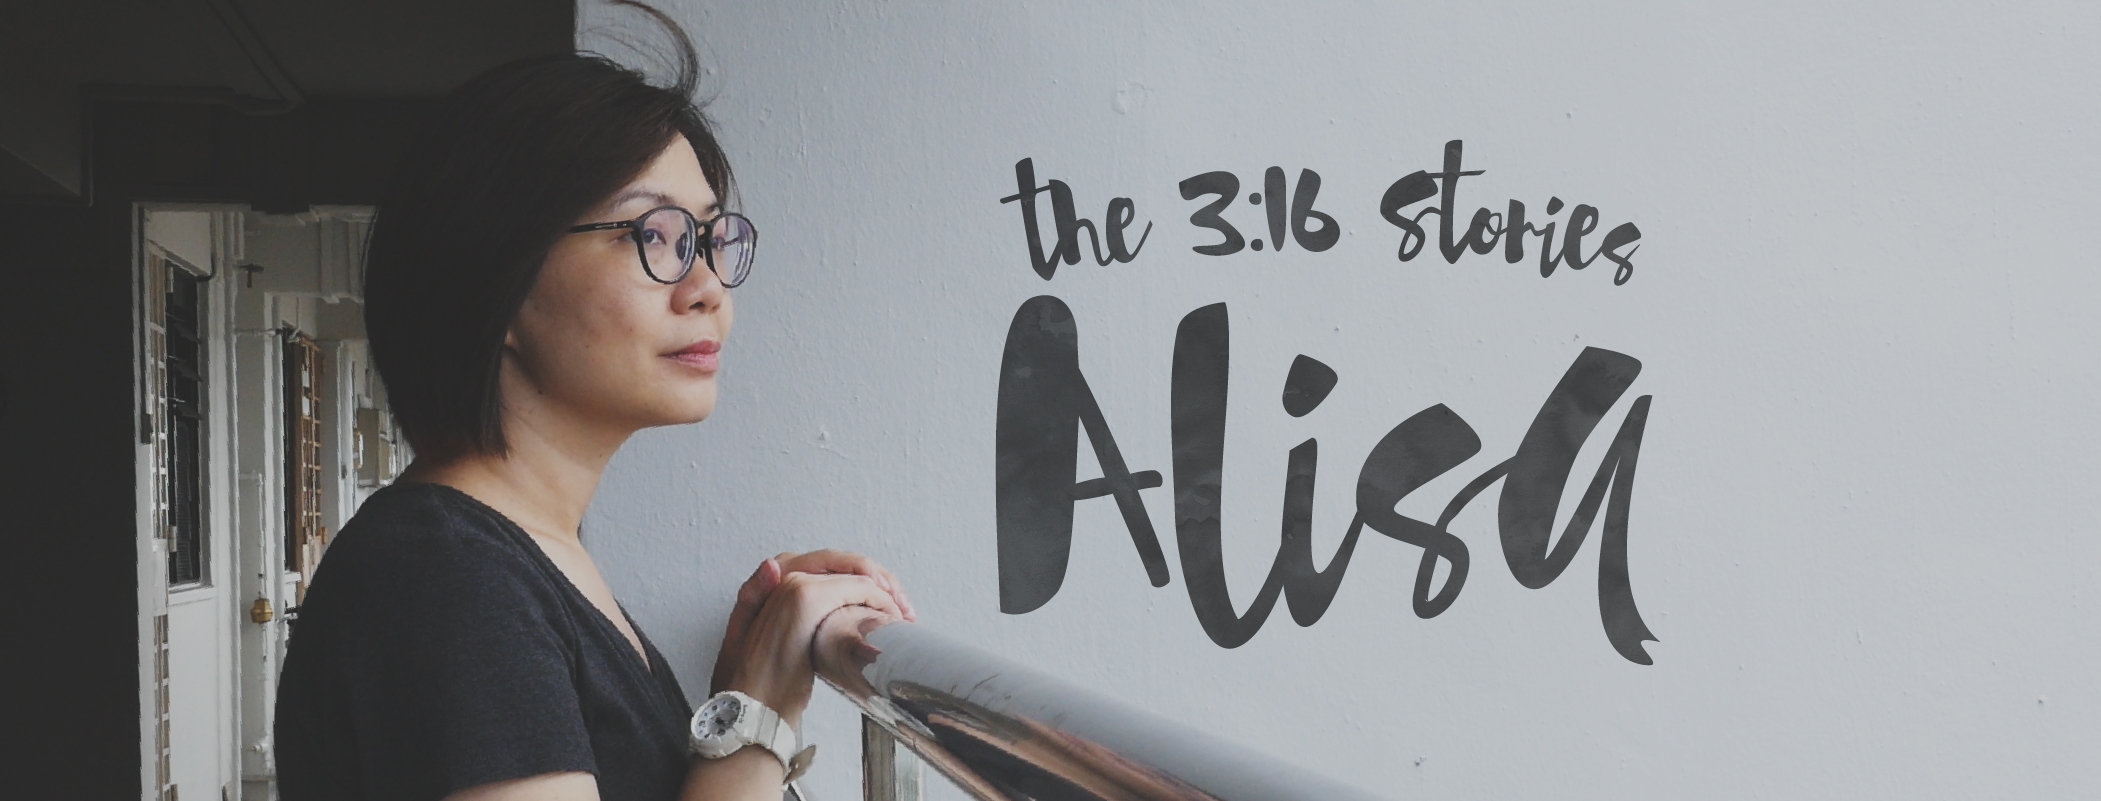 The 3:16 Stories - Alisa